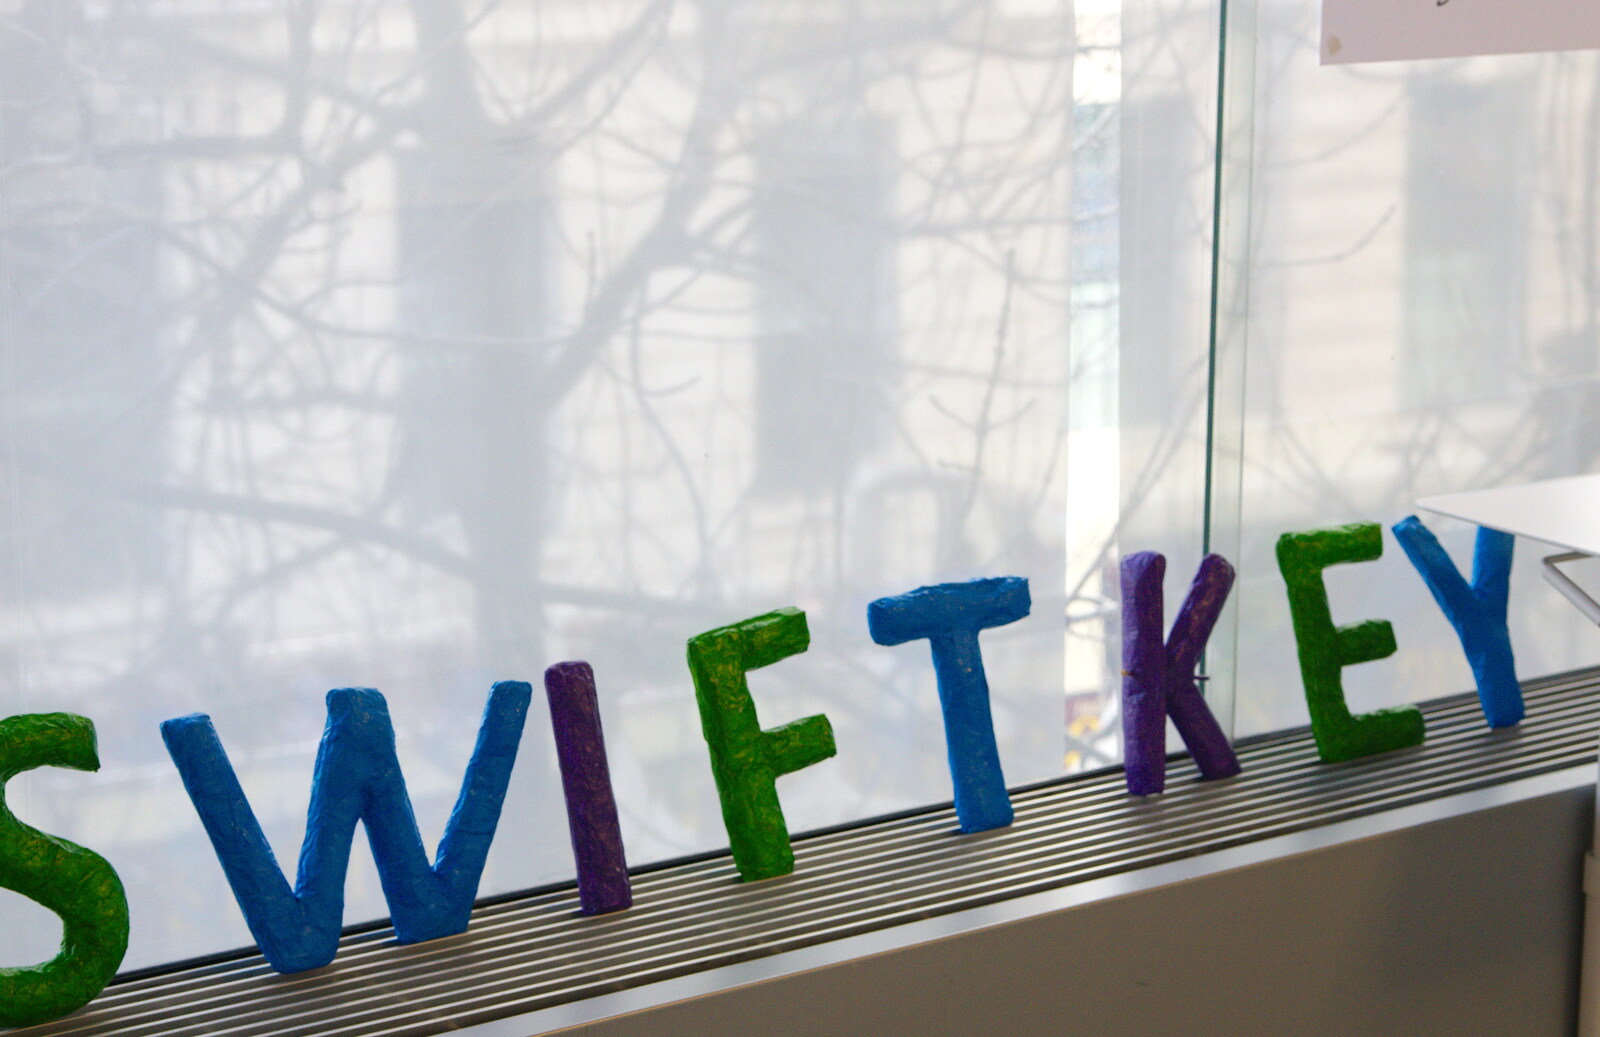 Corporate identity from SwiftKey Innovation, The Hub, Westminster, London - 21st February 2014